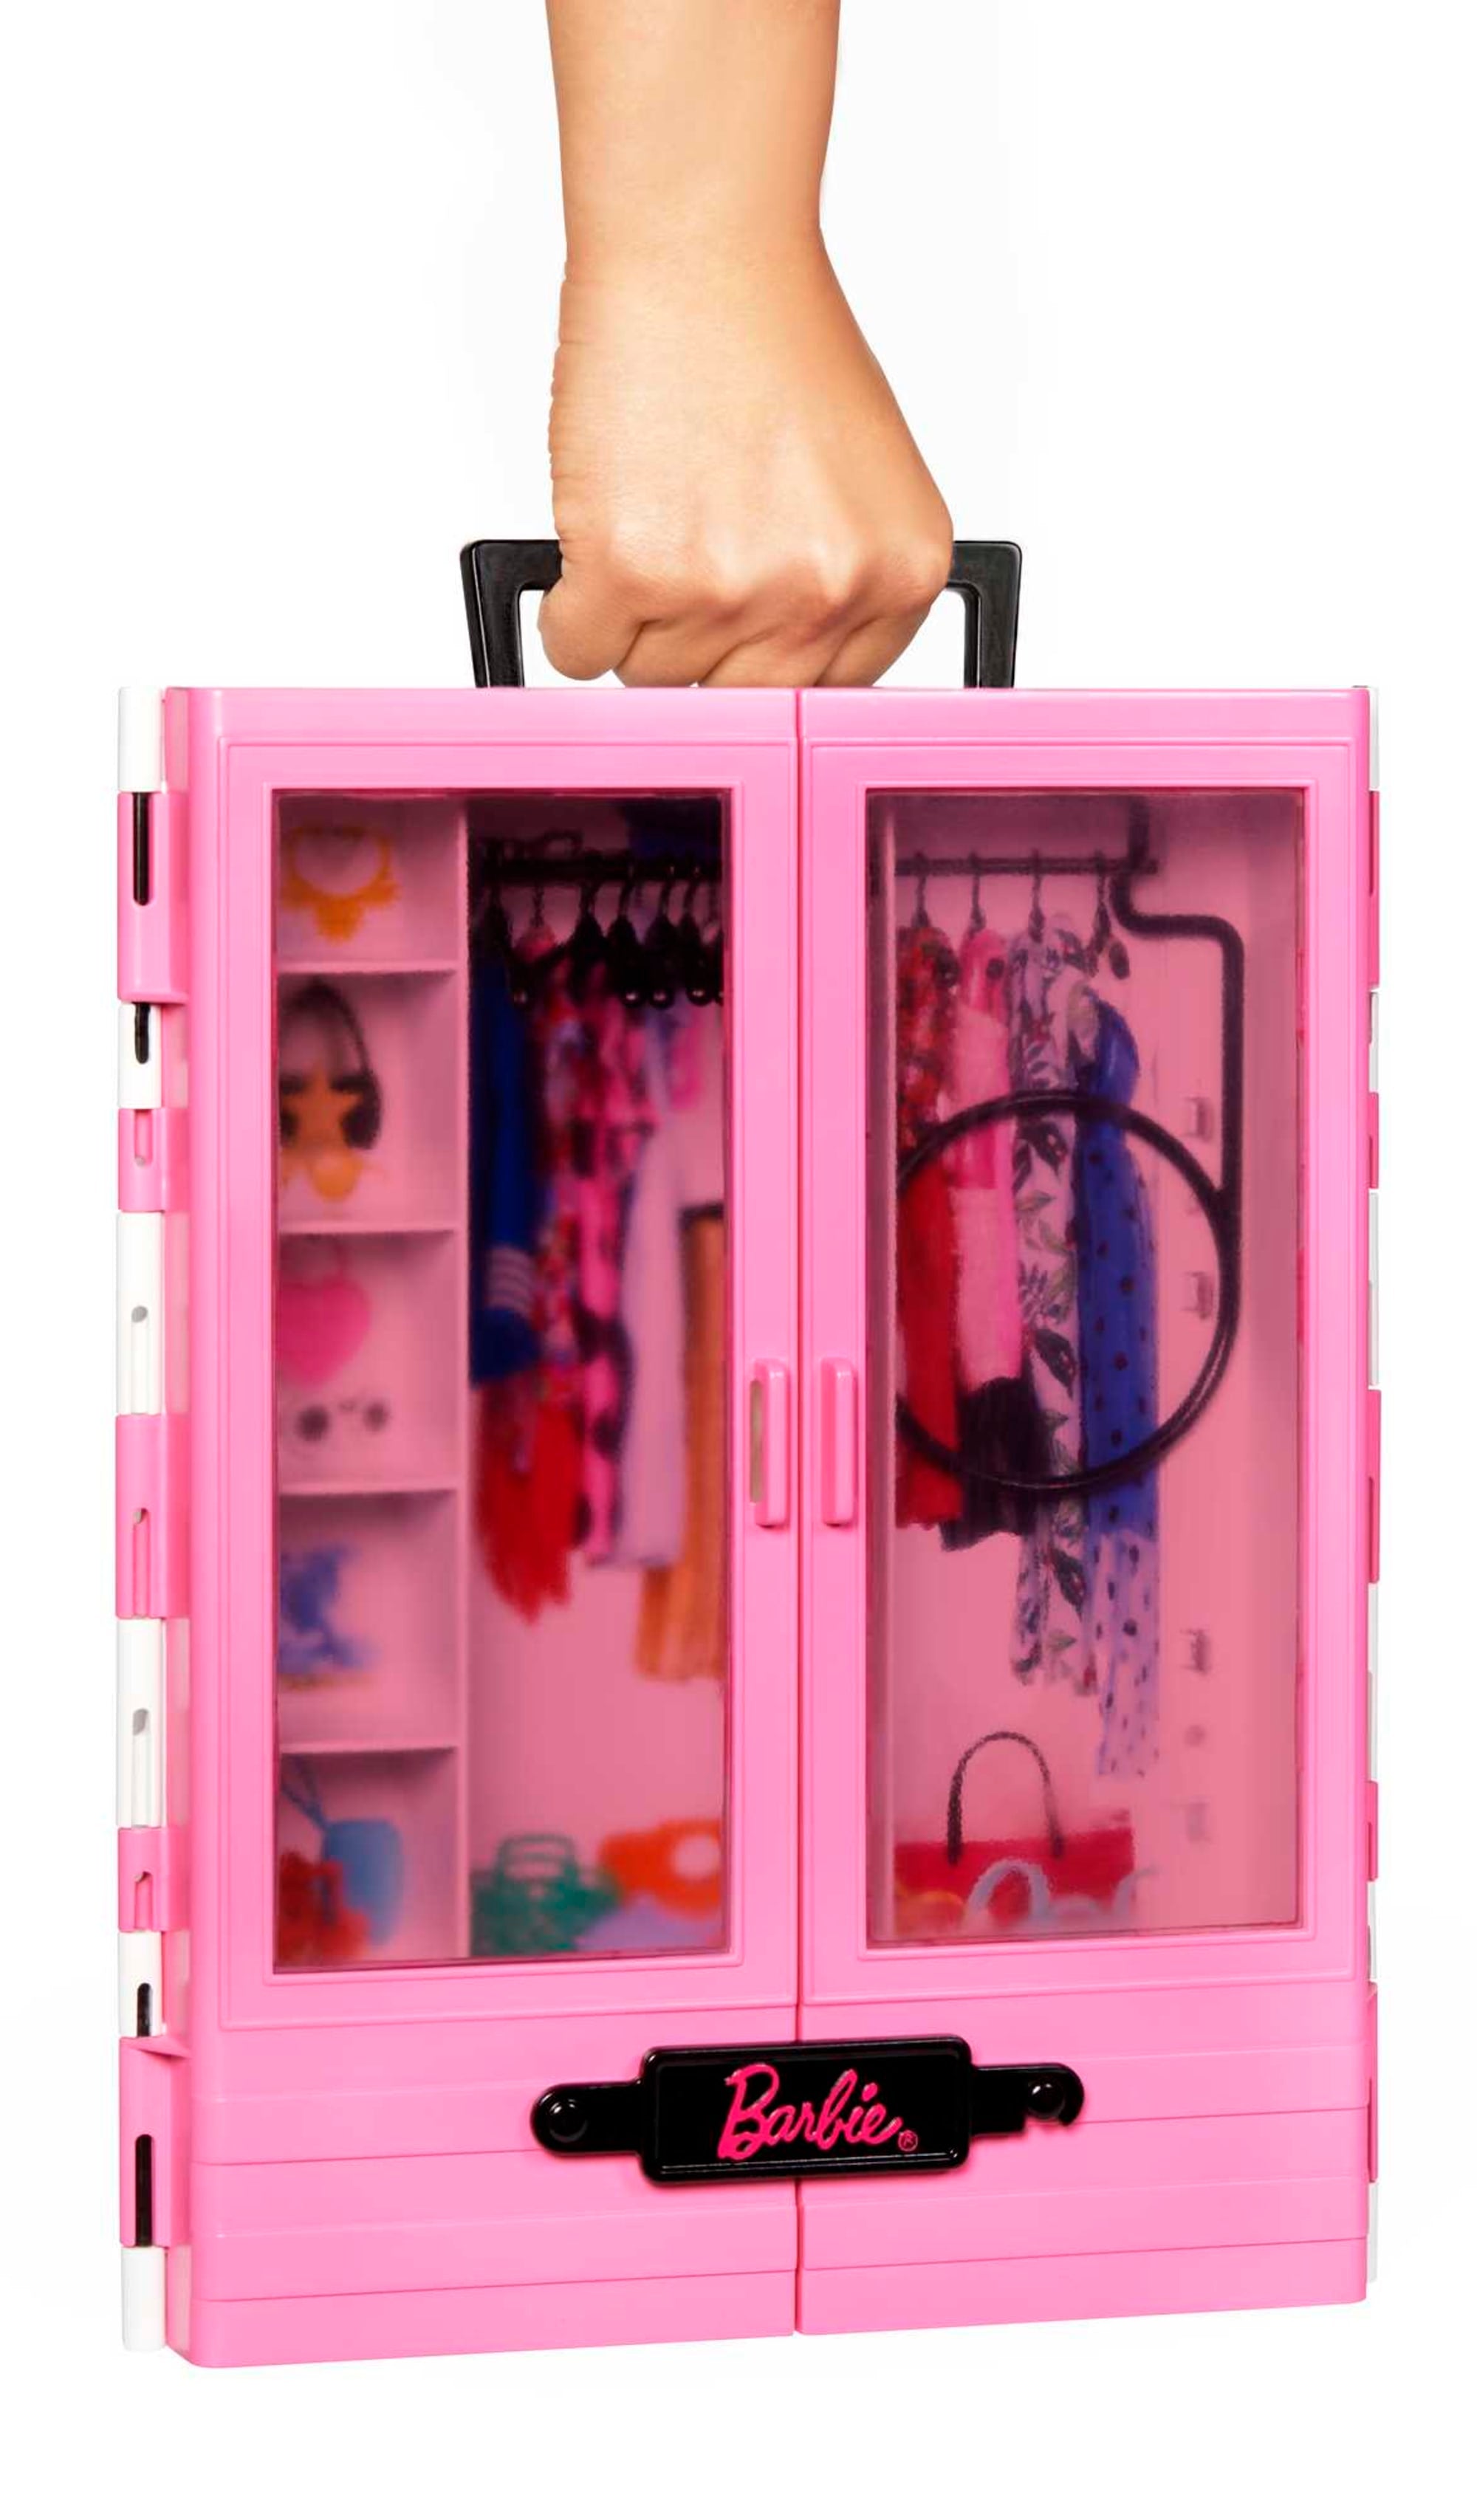 Barbie Fashionistas Ultimate Closet, Purple – Toys Onestar